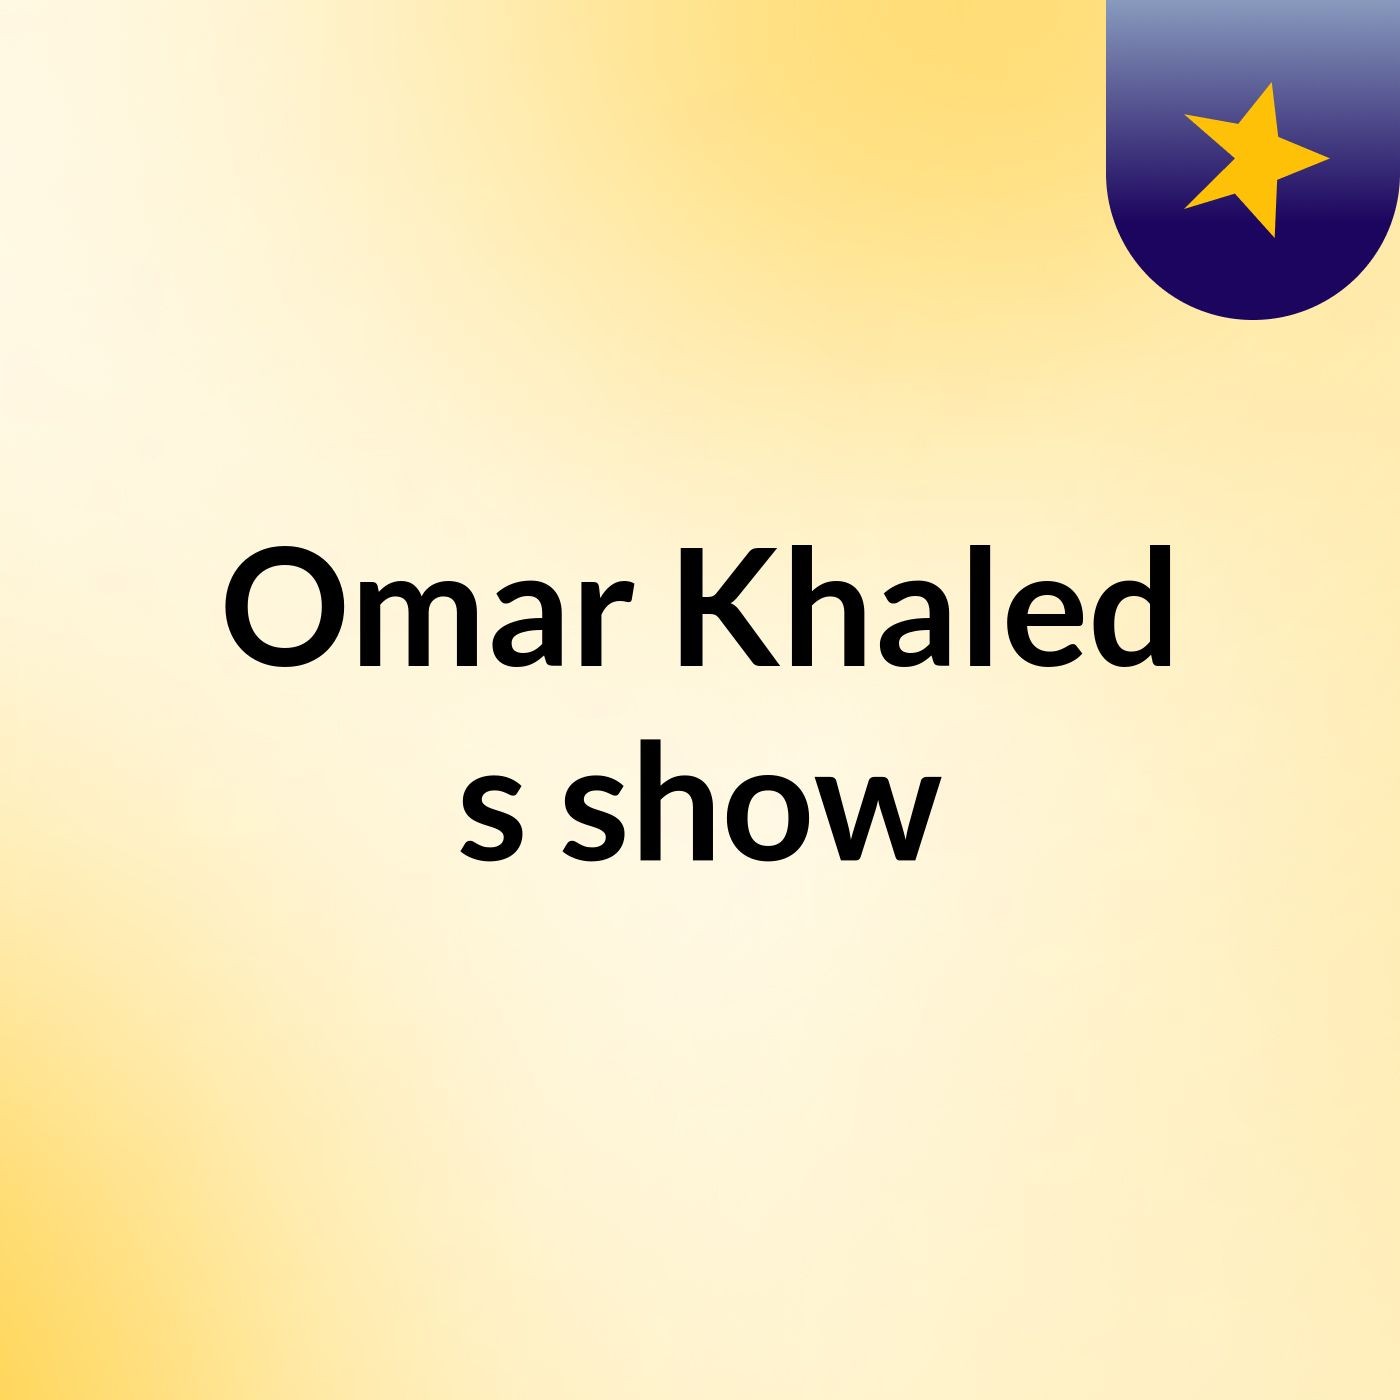 Omar Khaled's show